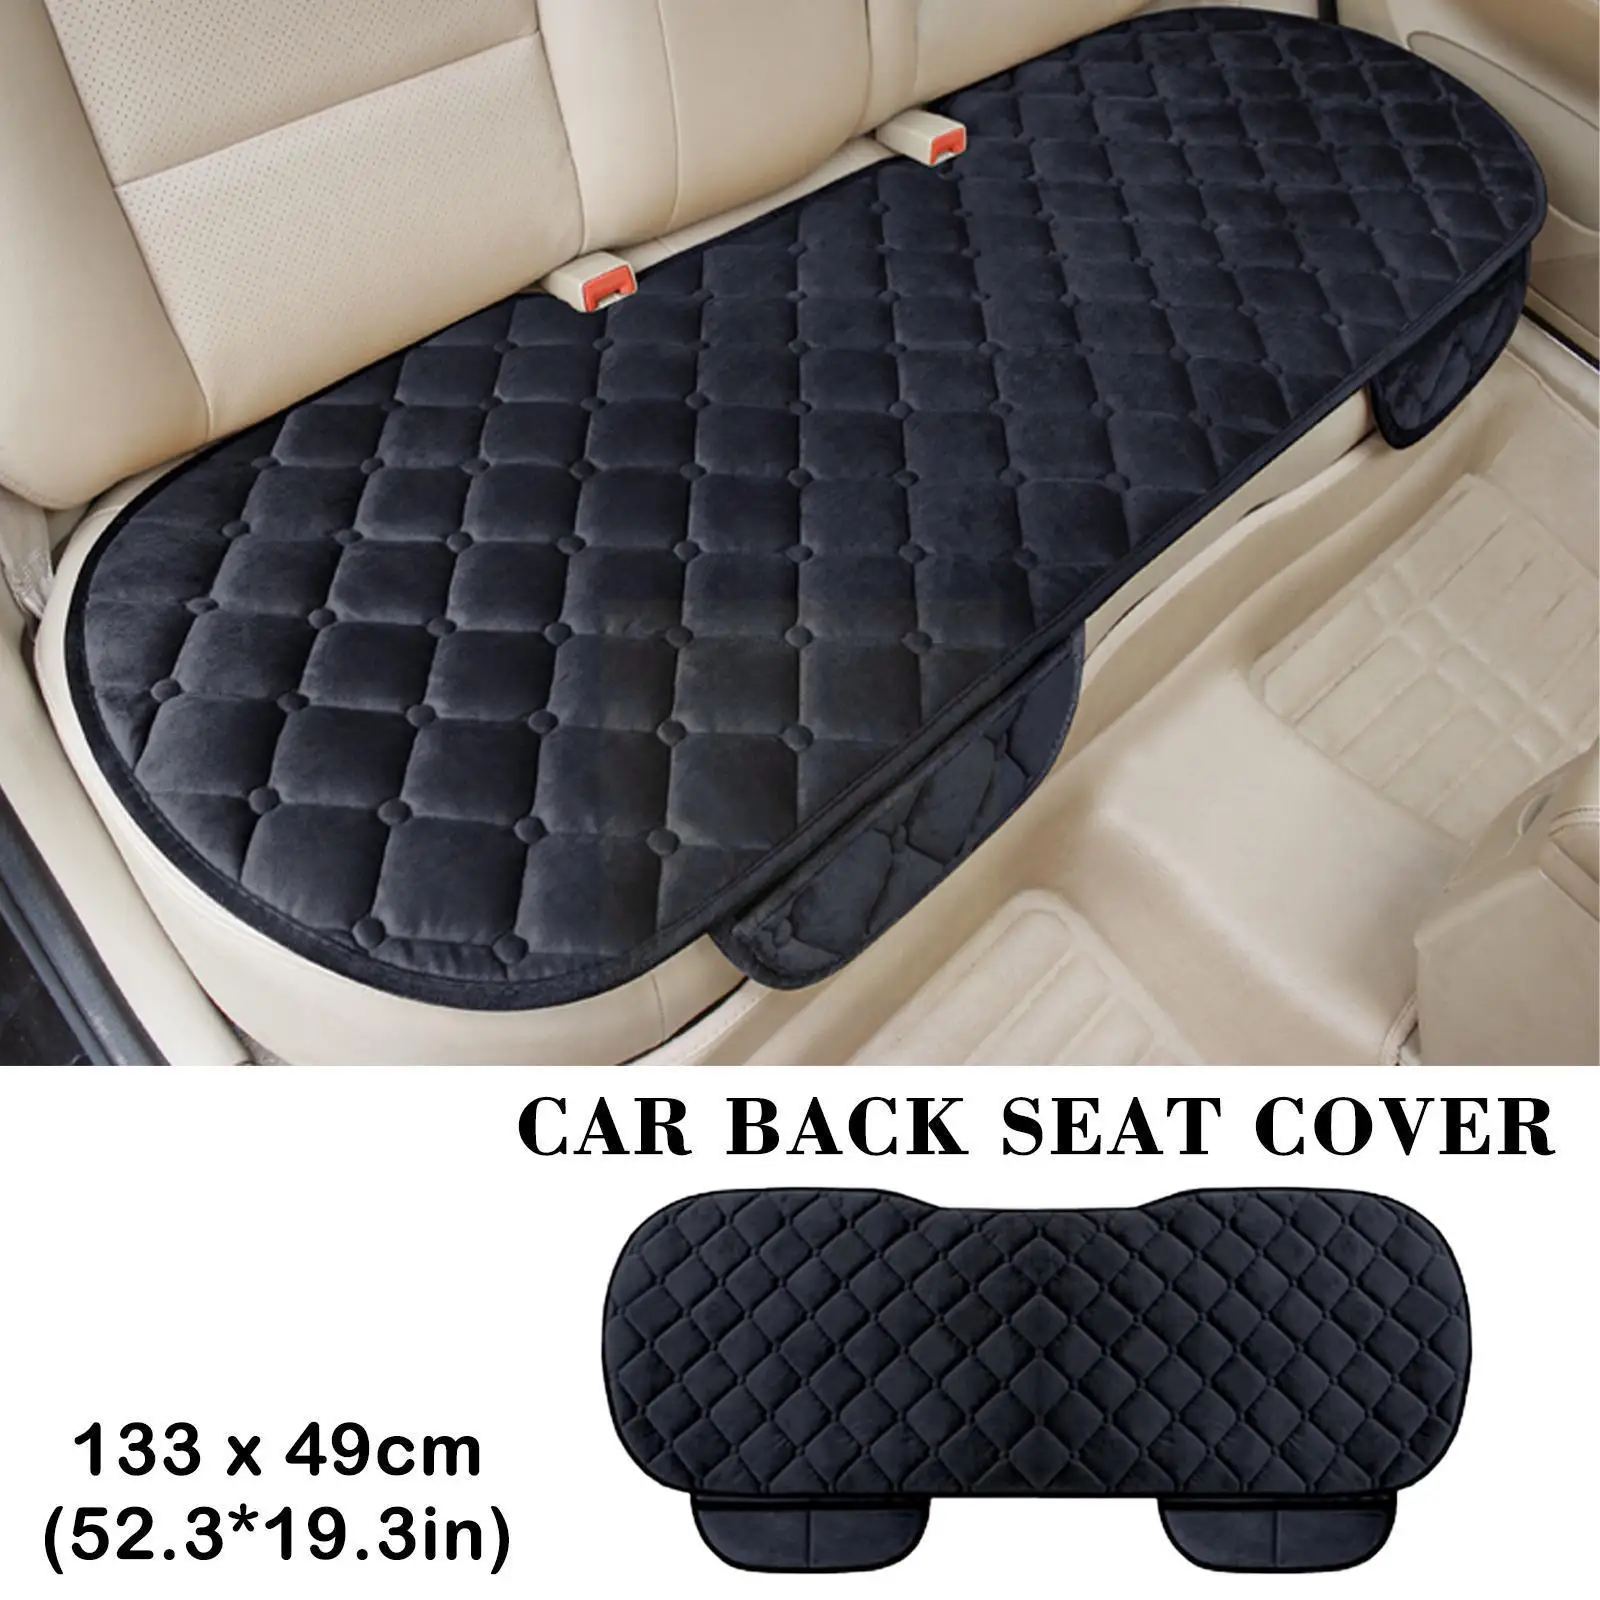 Car Back Row Seat Cover Rear Flock Cloth Cushion Non Winter Mat Fit Slide Auto Pad Van Universal Truck Warm Keep Suv Protec R4B3 1